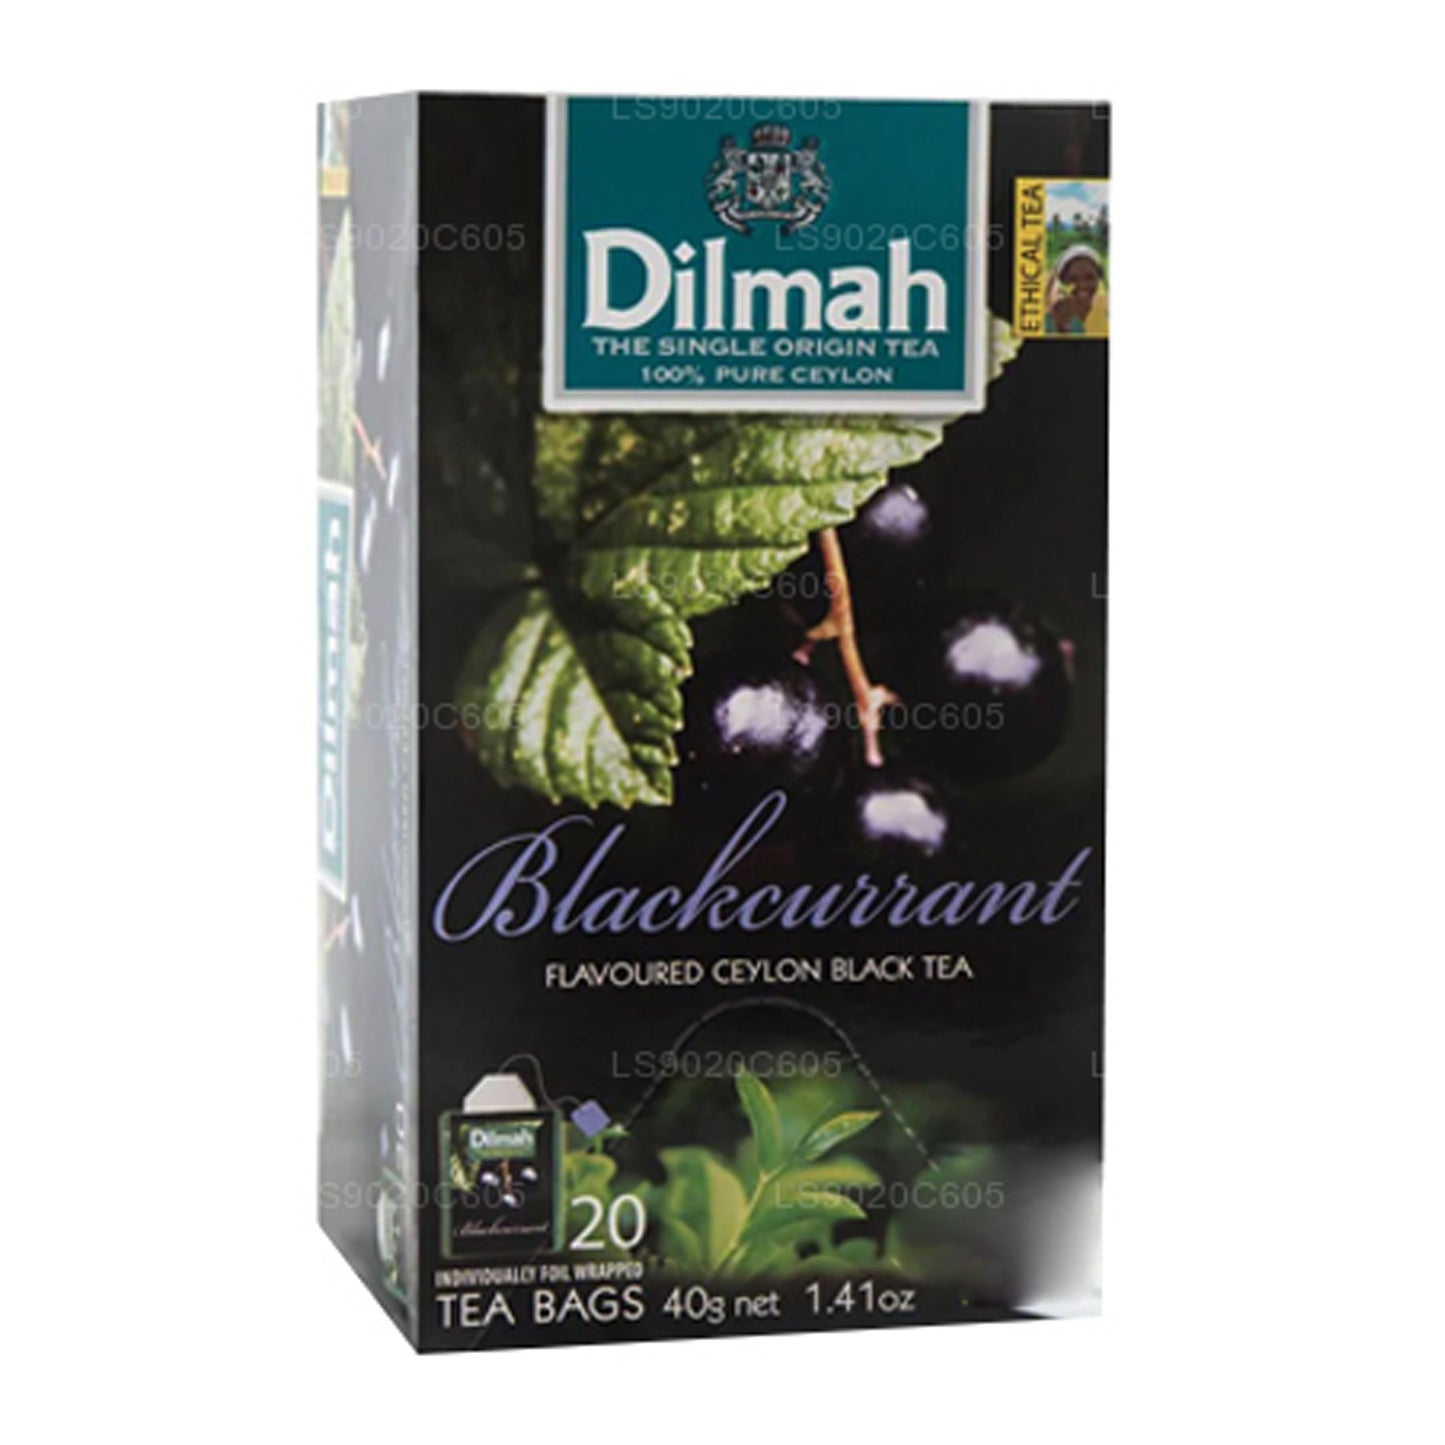 Dilmah svarta vinbär smaksatt te (40g) 20 tepåsar